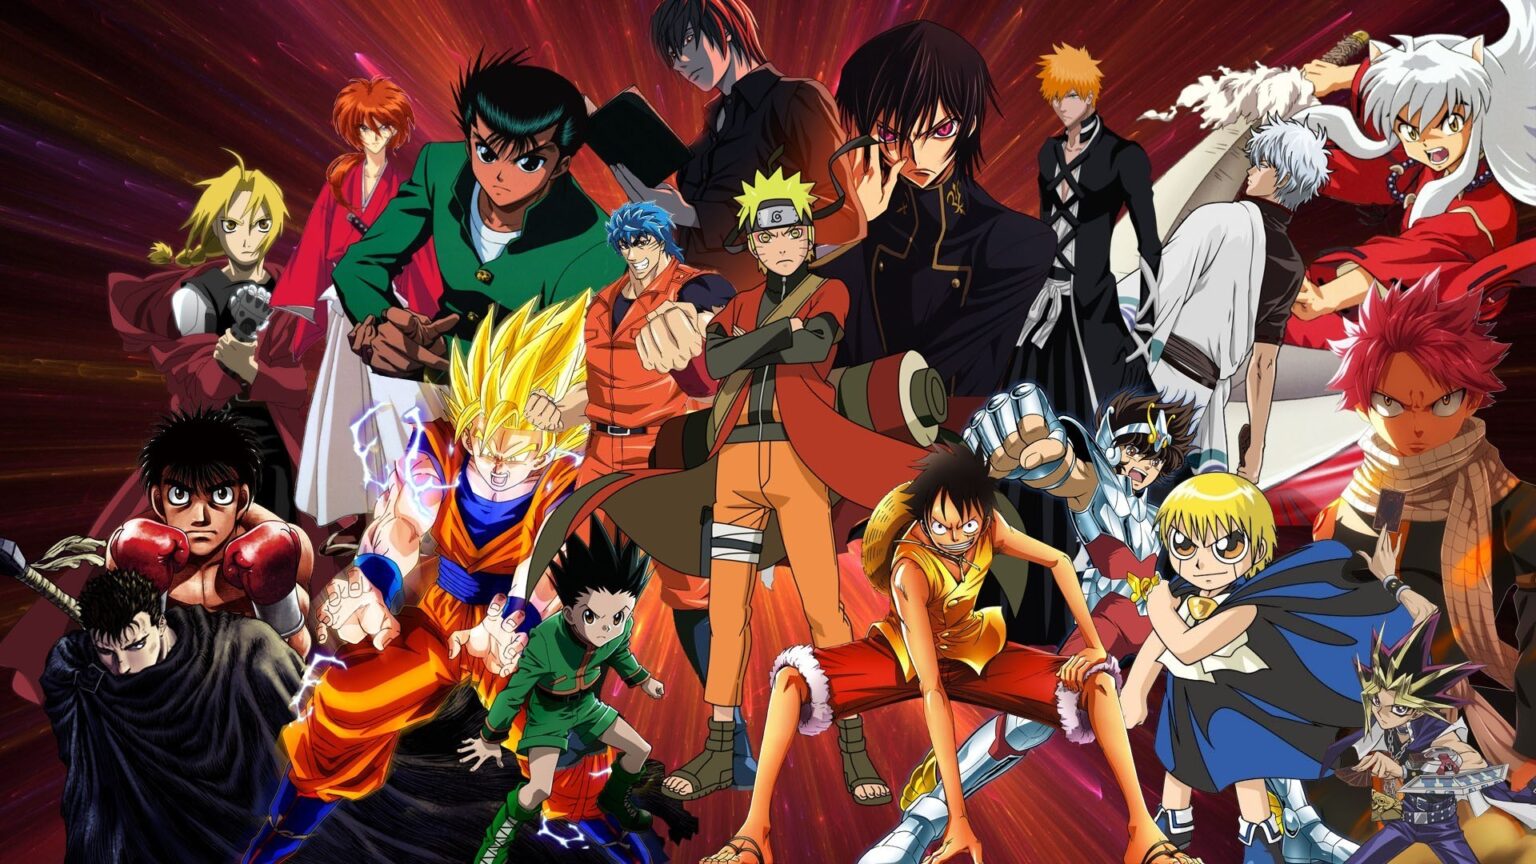 ¿No sabes donde encontrar tu anime favorito? Chécate estas páginas para ver tus series japonesas favoritas.